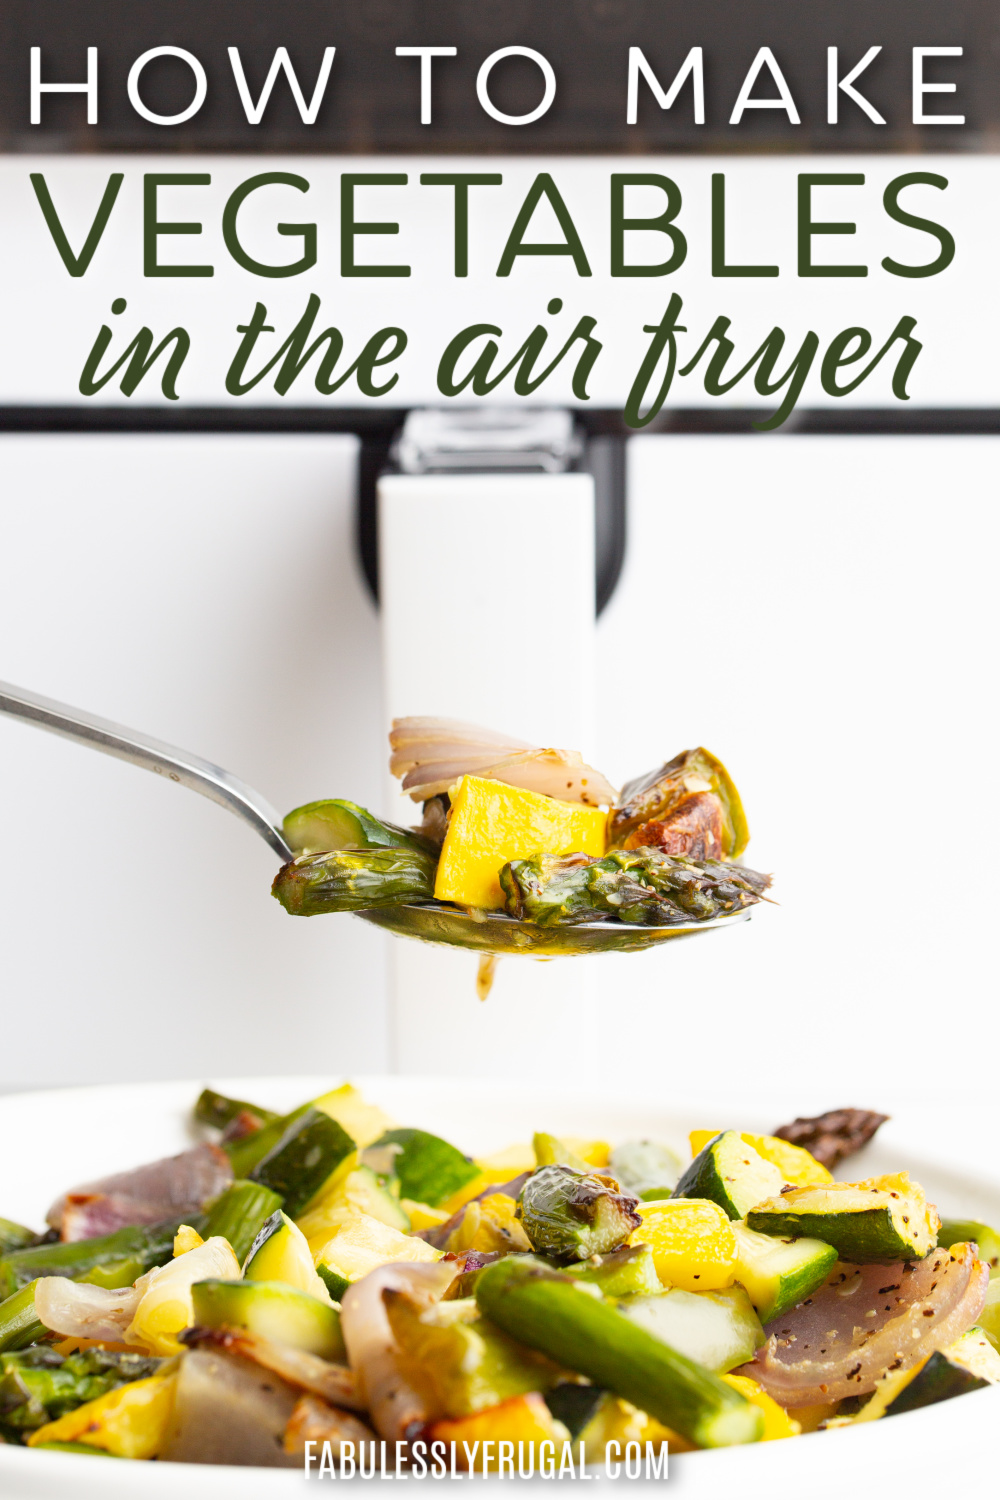 COSORI Air Fryer - Food Fanatic